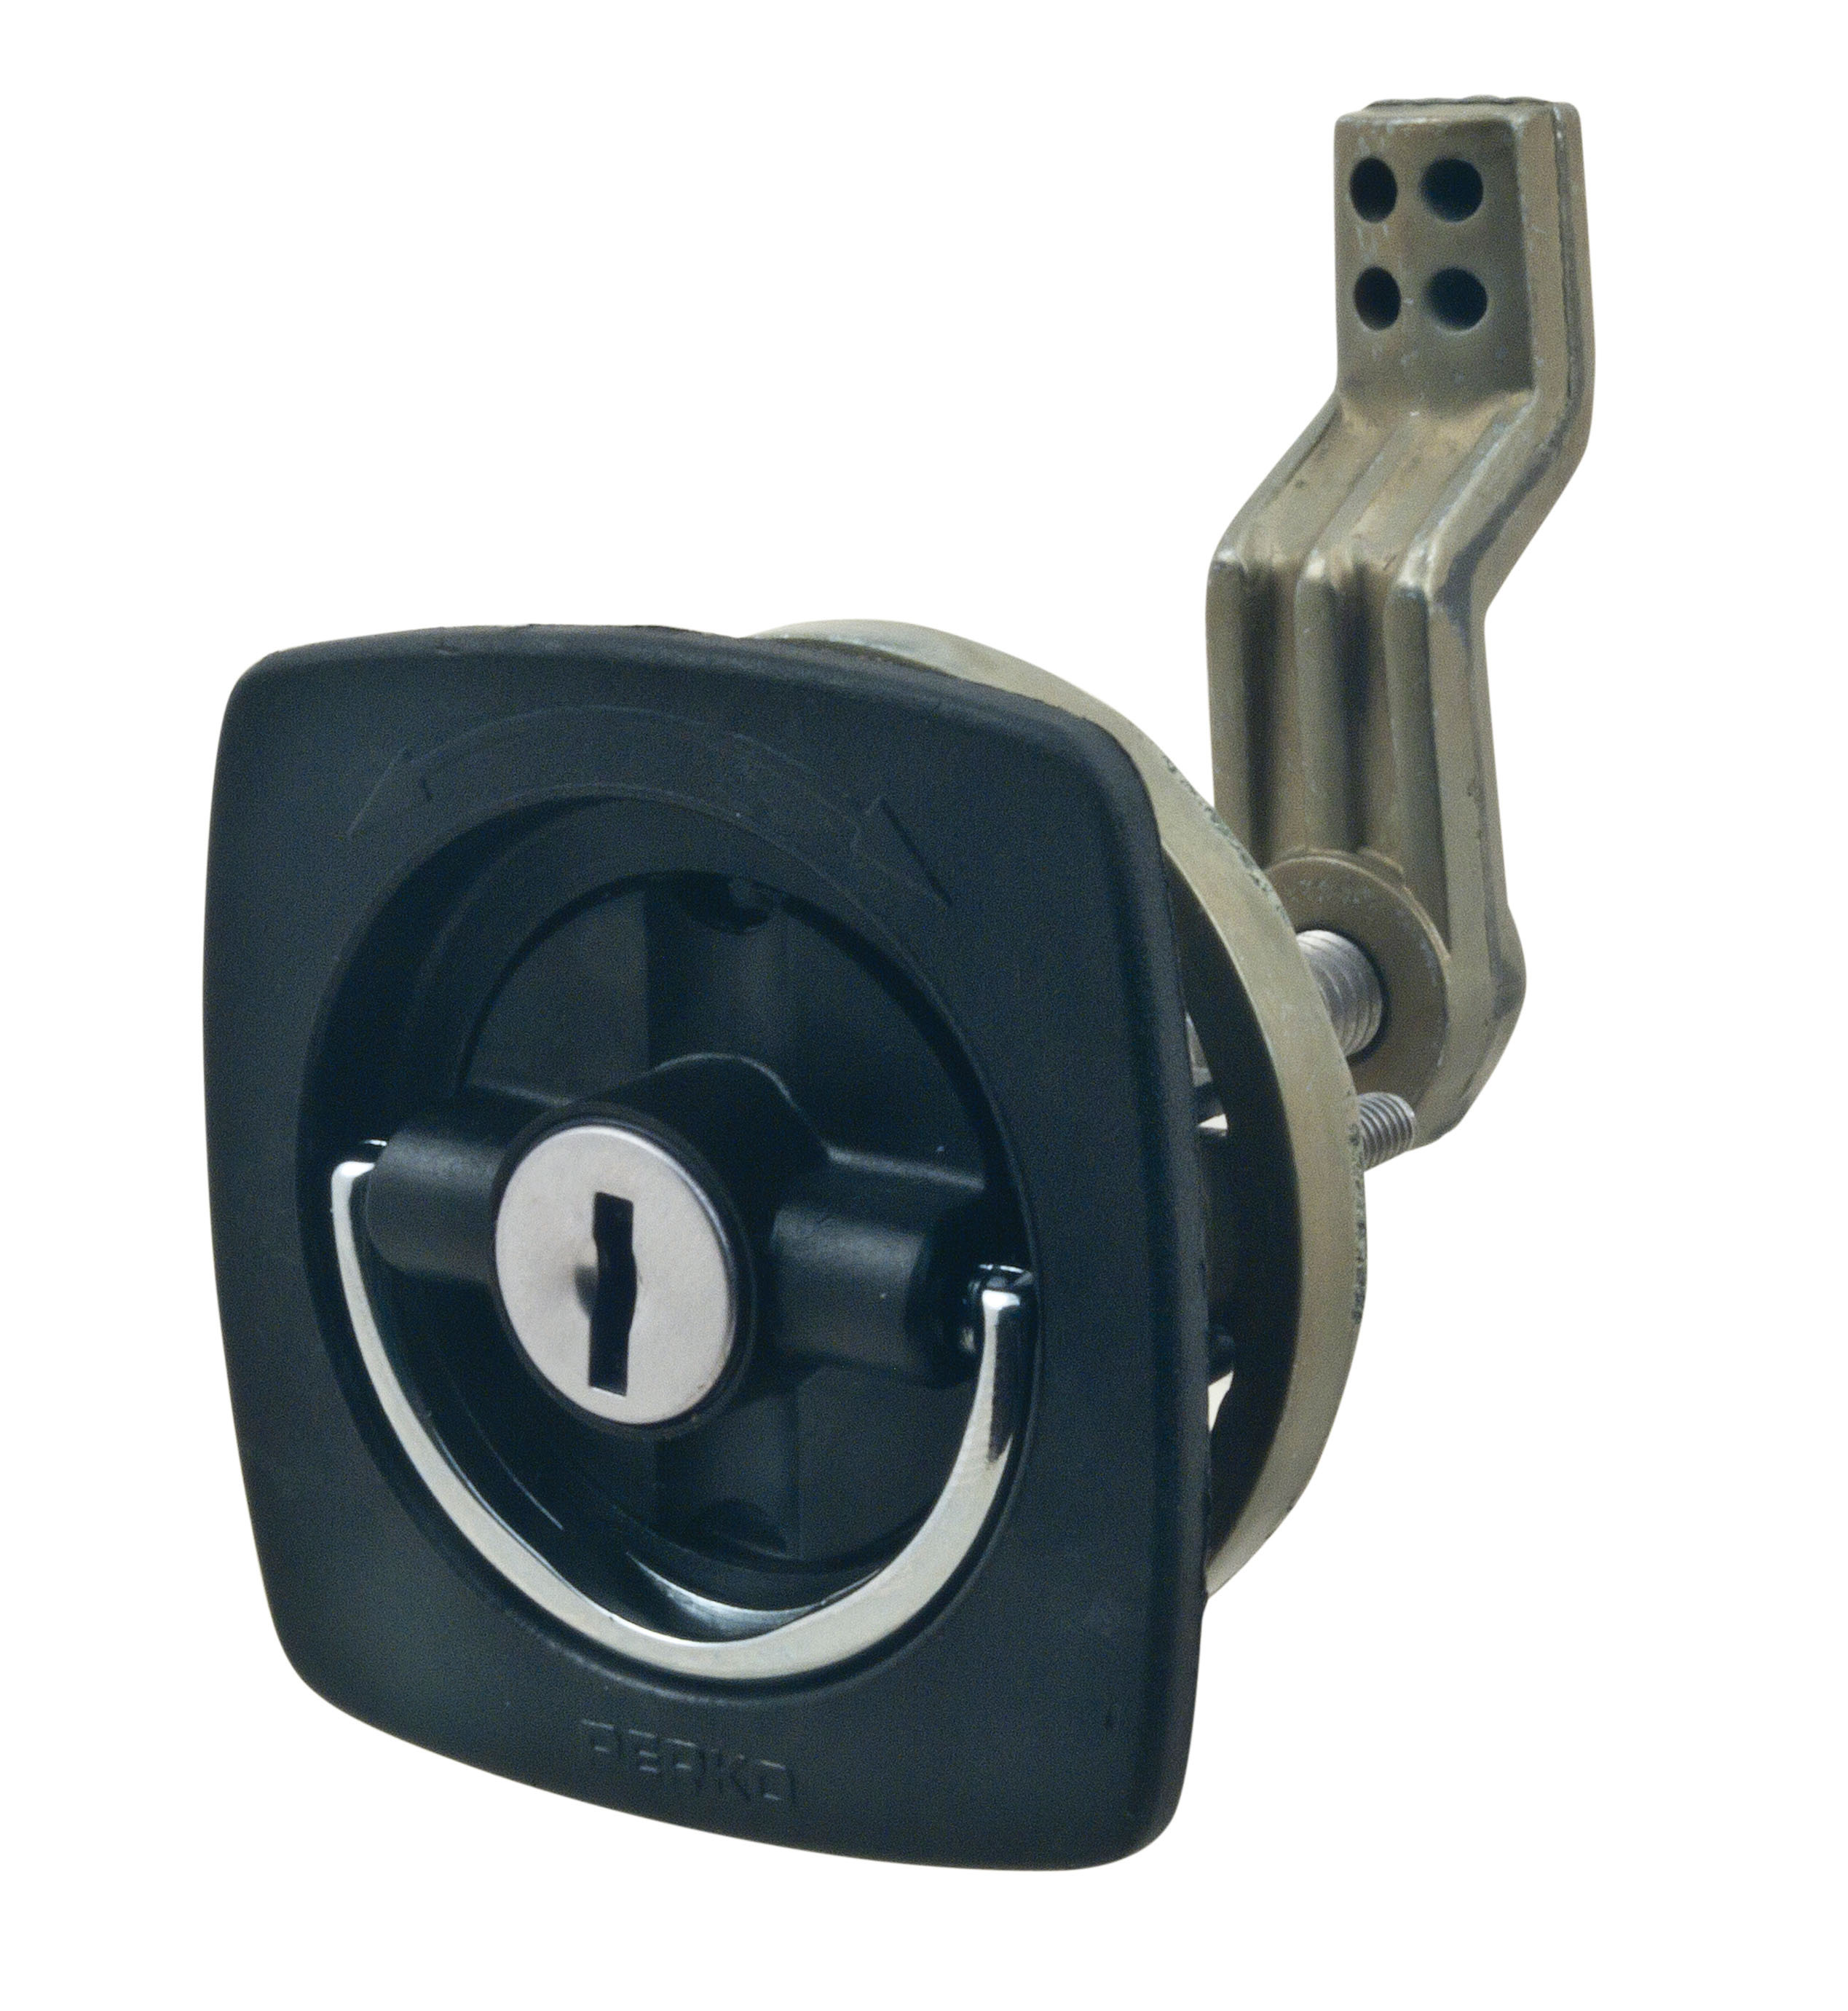 Figure No. 0931 - Flush Lock with 2 Keys